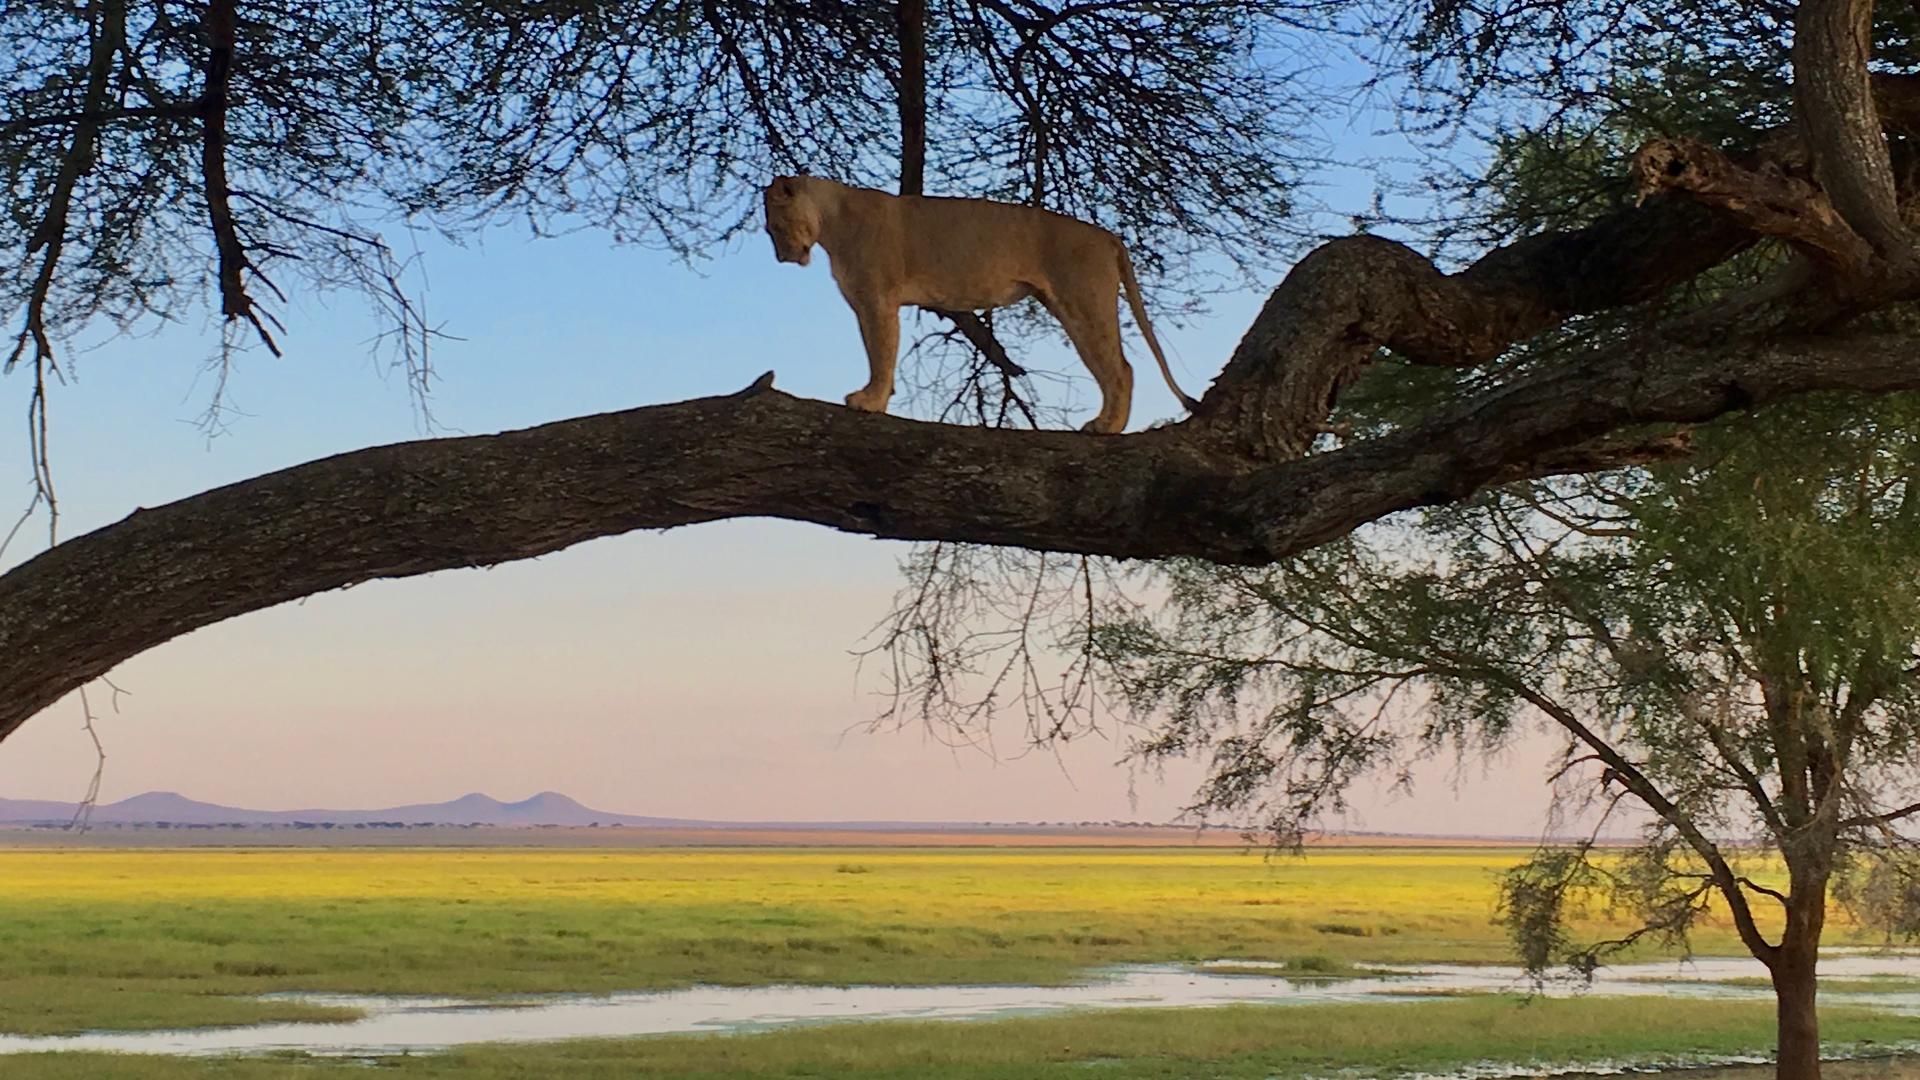 tree climbing lion tanzania safari